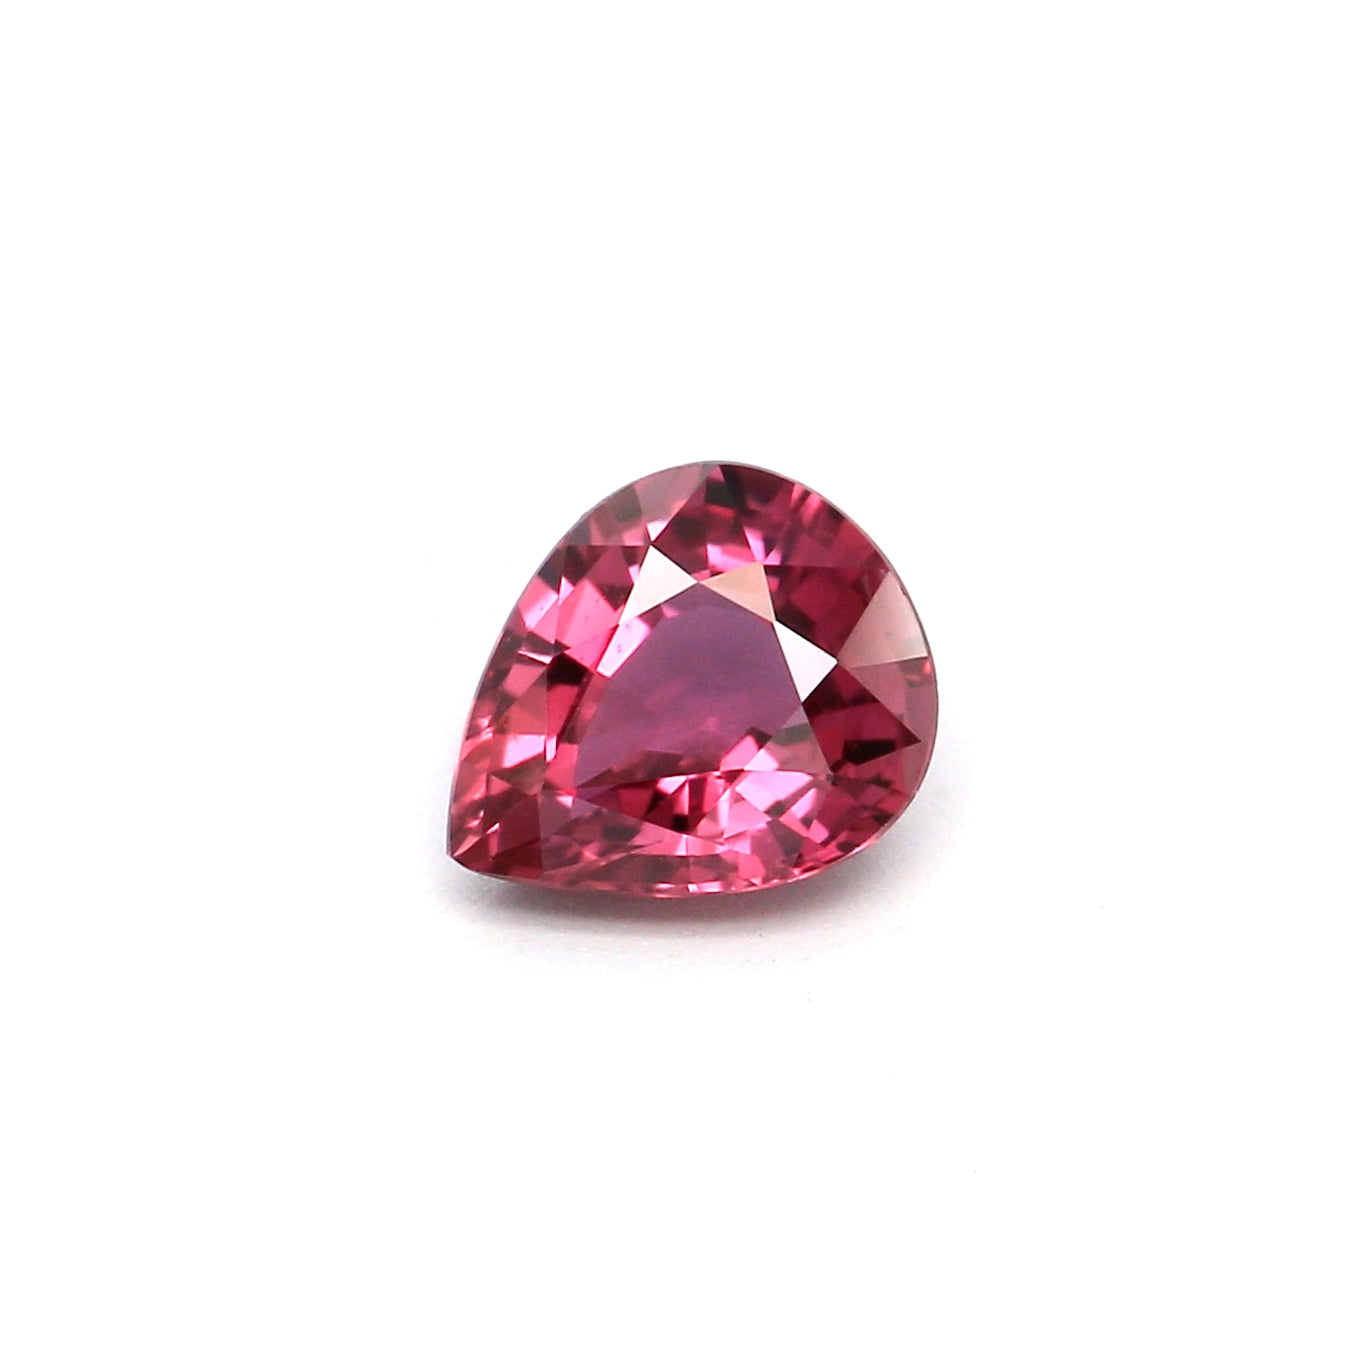 0.60ct Purplish Pink, Pear Shape Sapphire, Heated, Thailand - 5.83 x 4.82 x 2.80mm